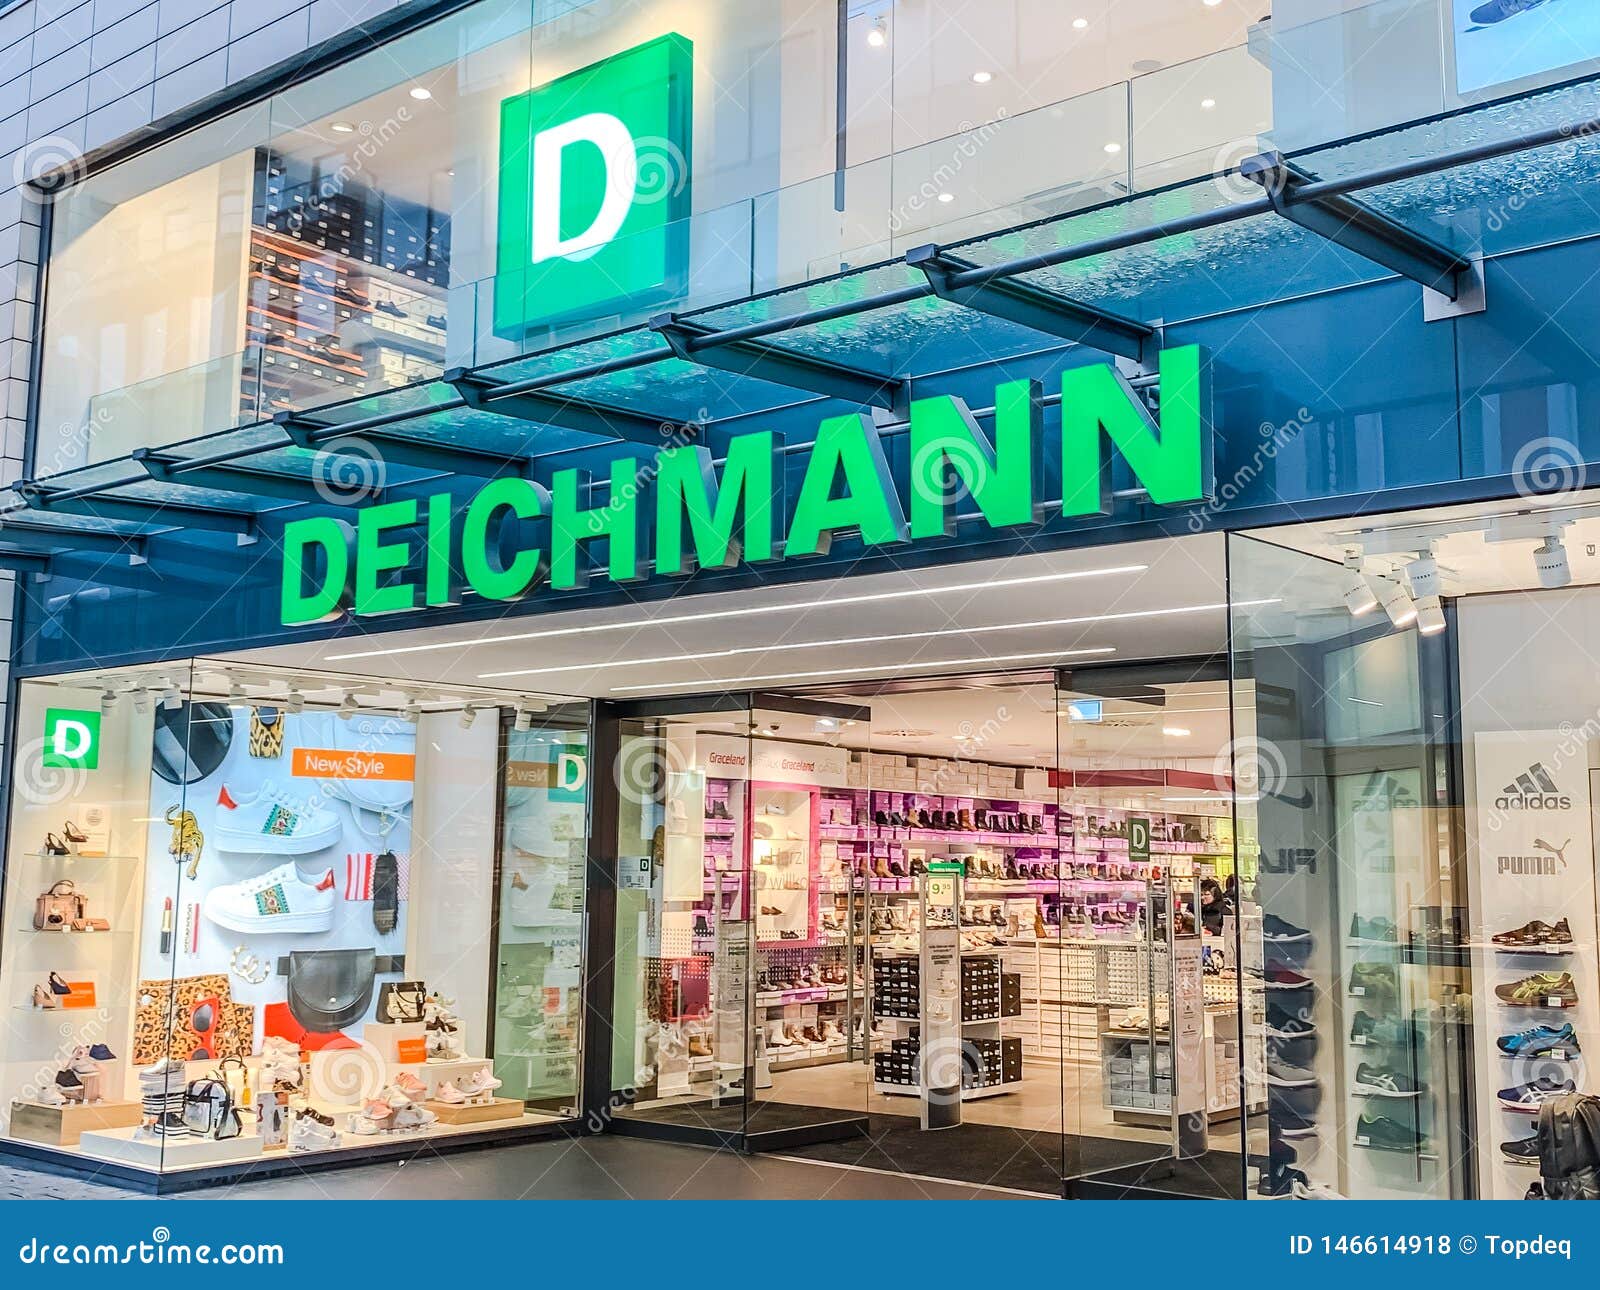 Deichmann Retail Footwear Brand Logo Editorial Stock Photo Image of sell, deichmann: 146614918